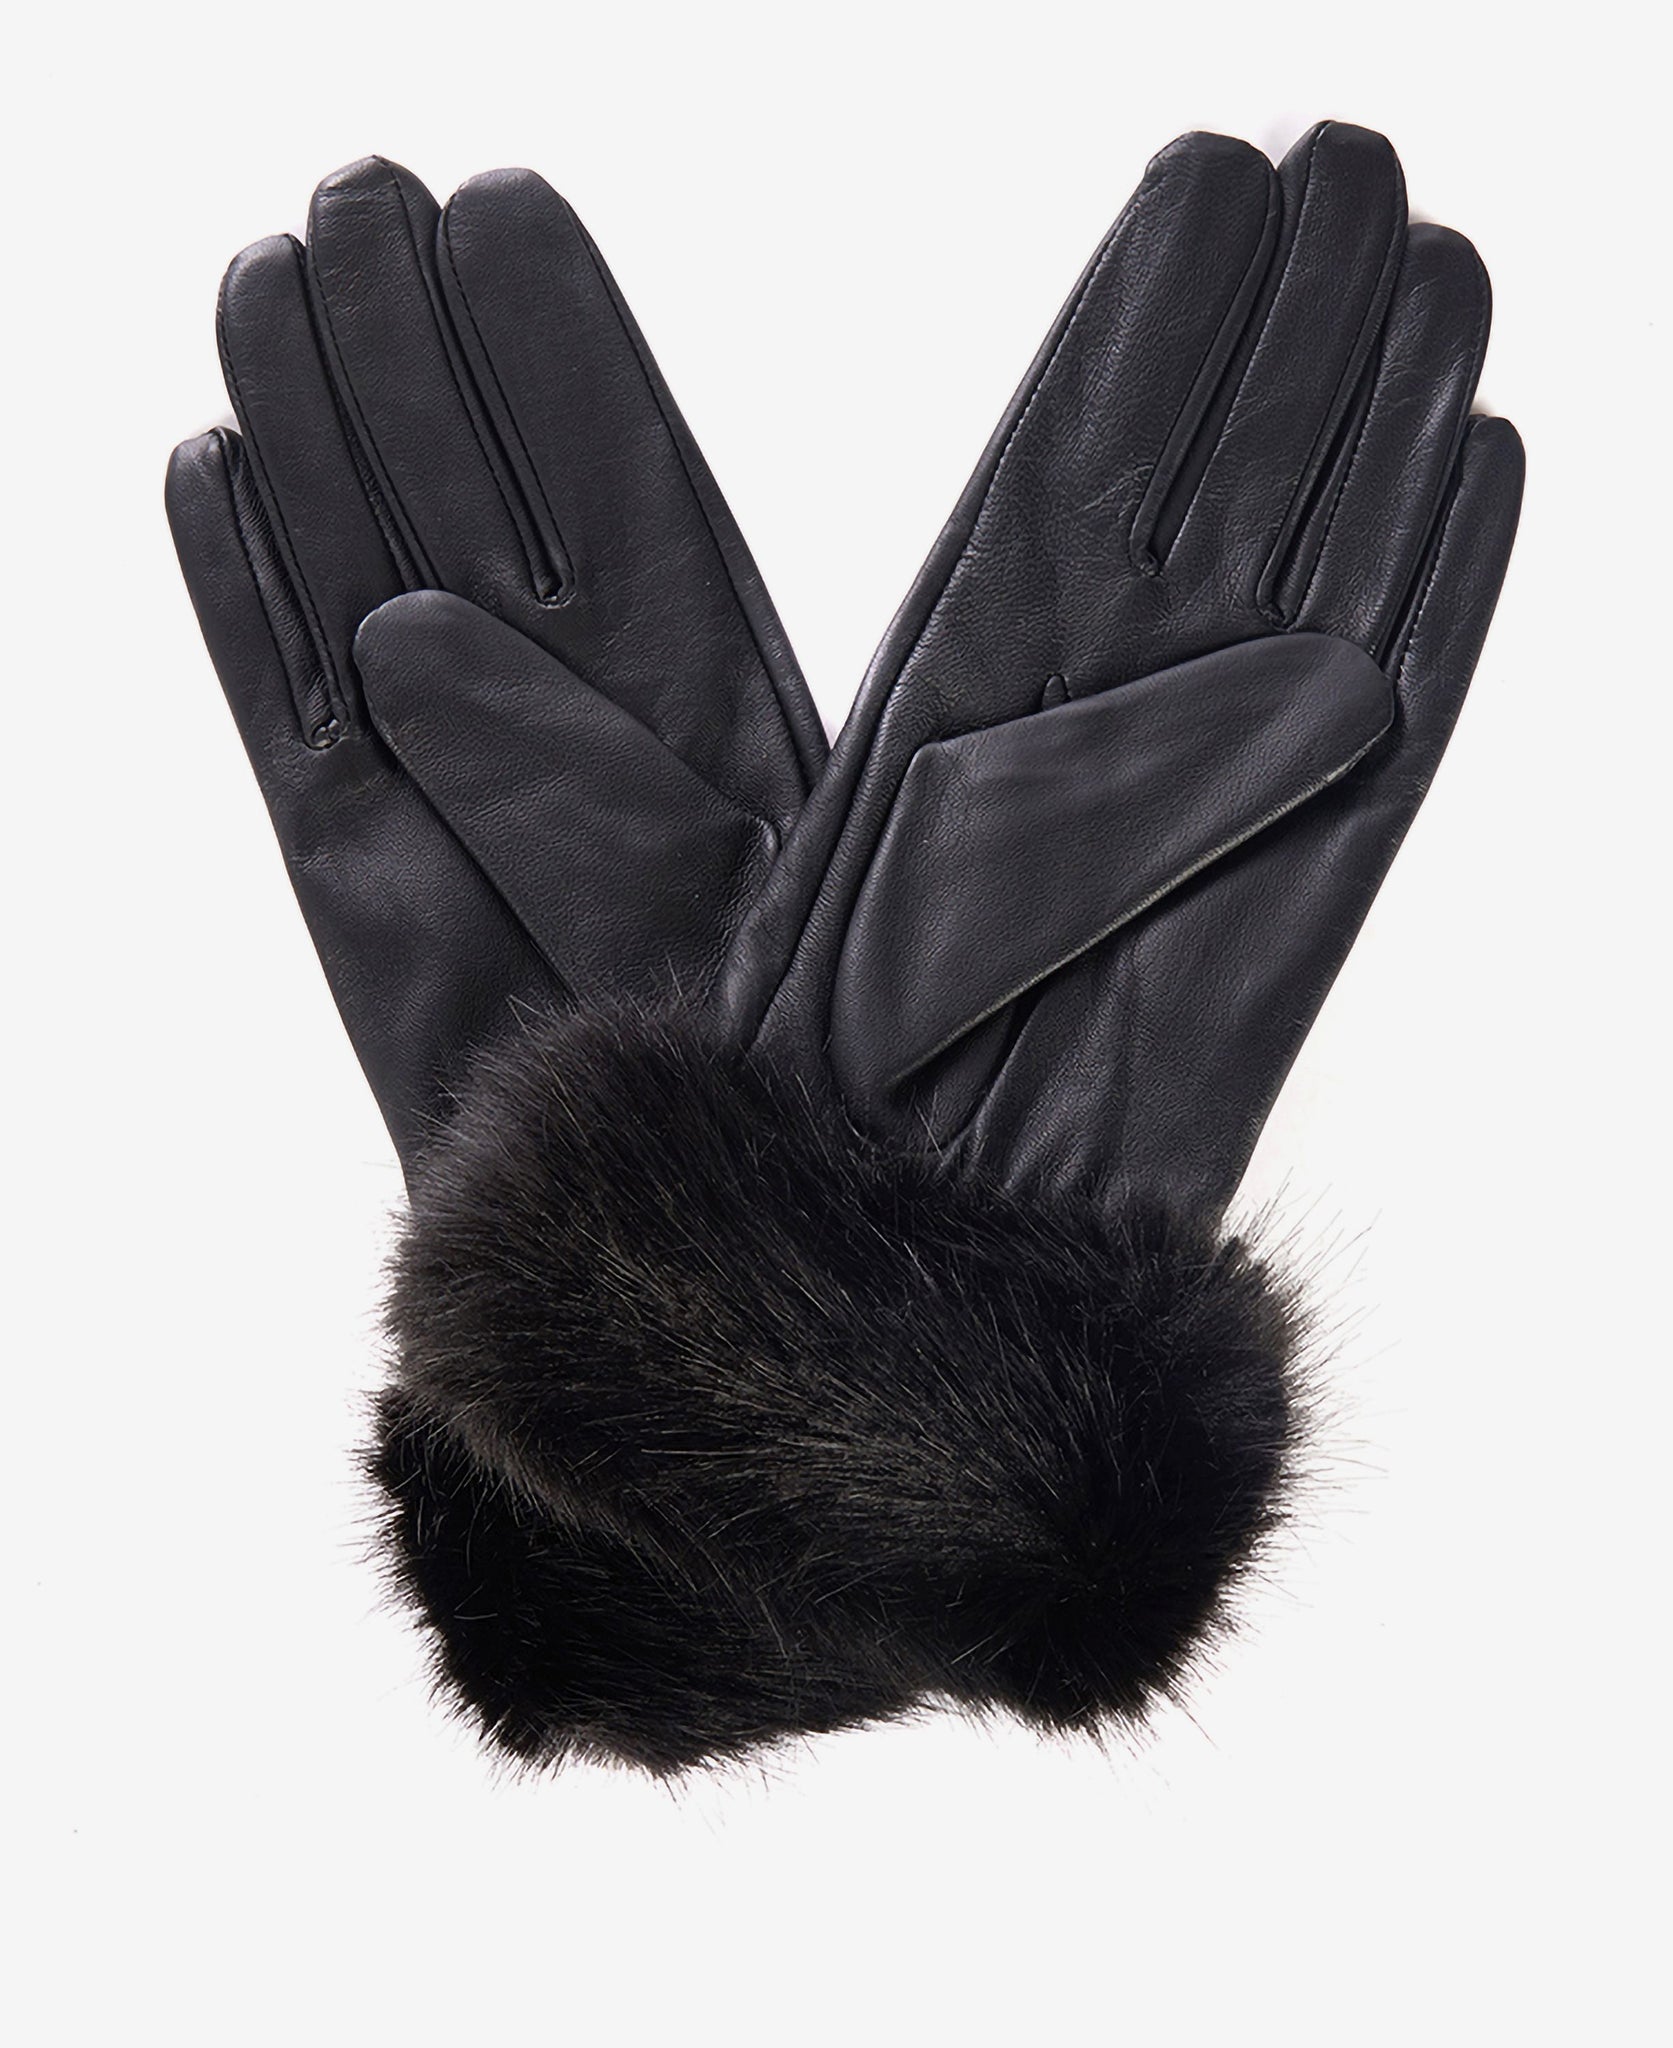 Barbour Ladies Black Leather Fur Trim Gloves